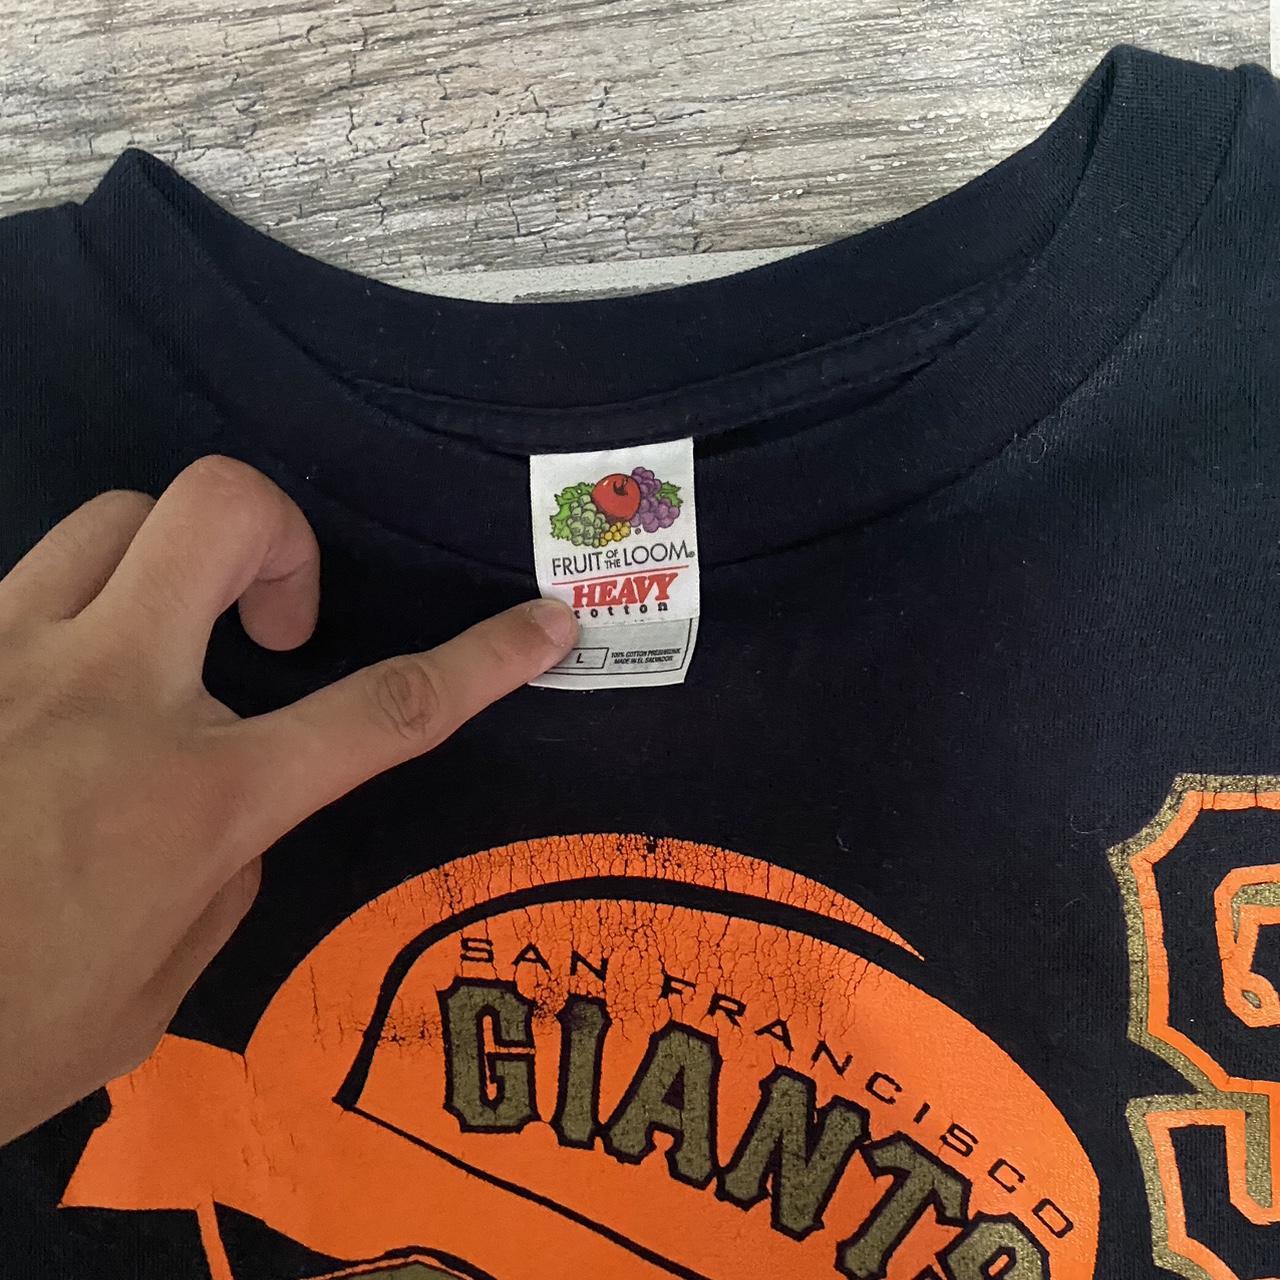 San Francisco Giants Beat LA T-shirt – Emilytees – Shop trending